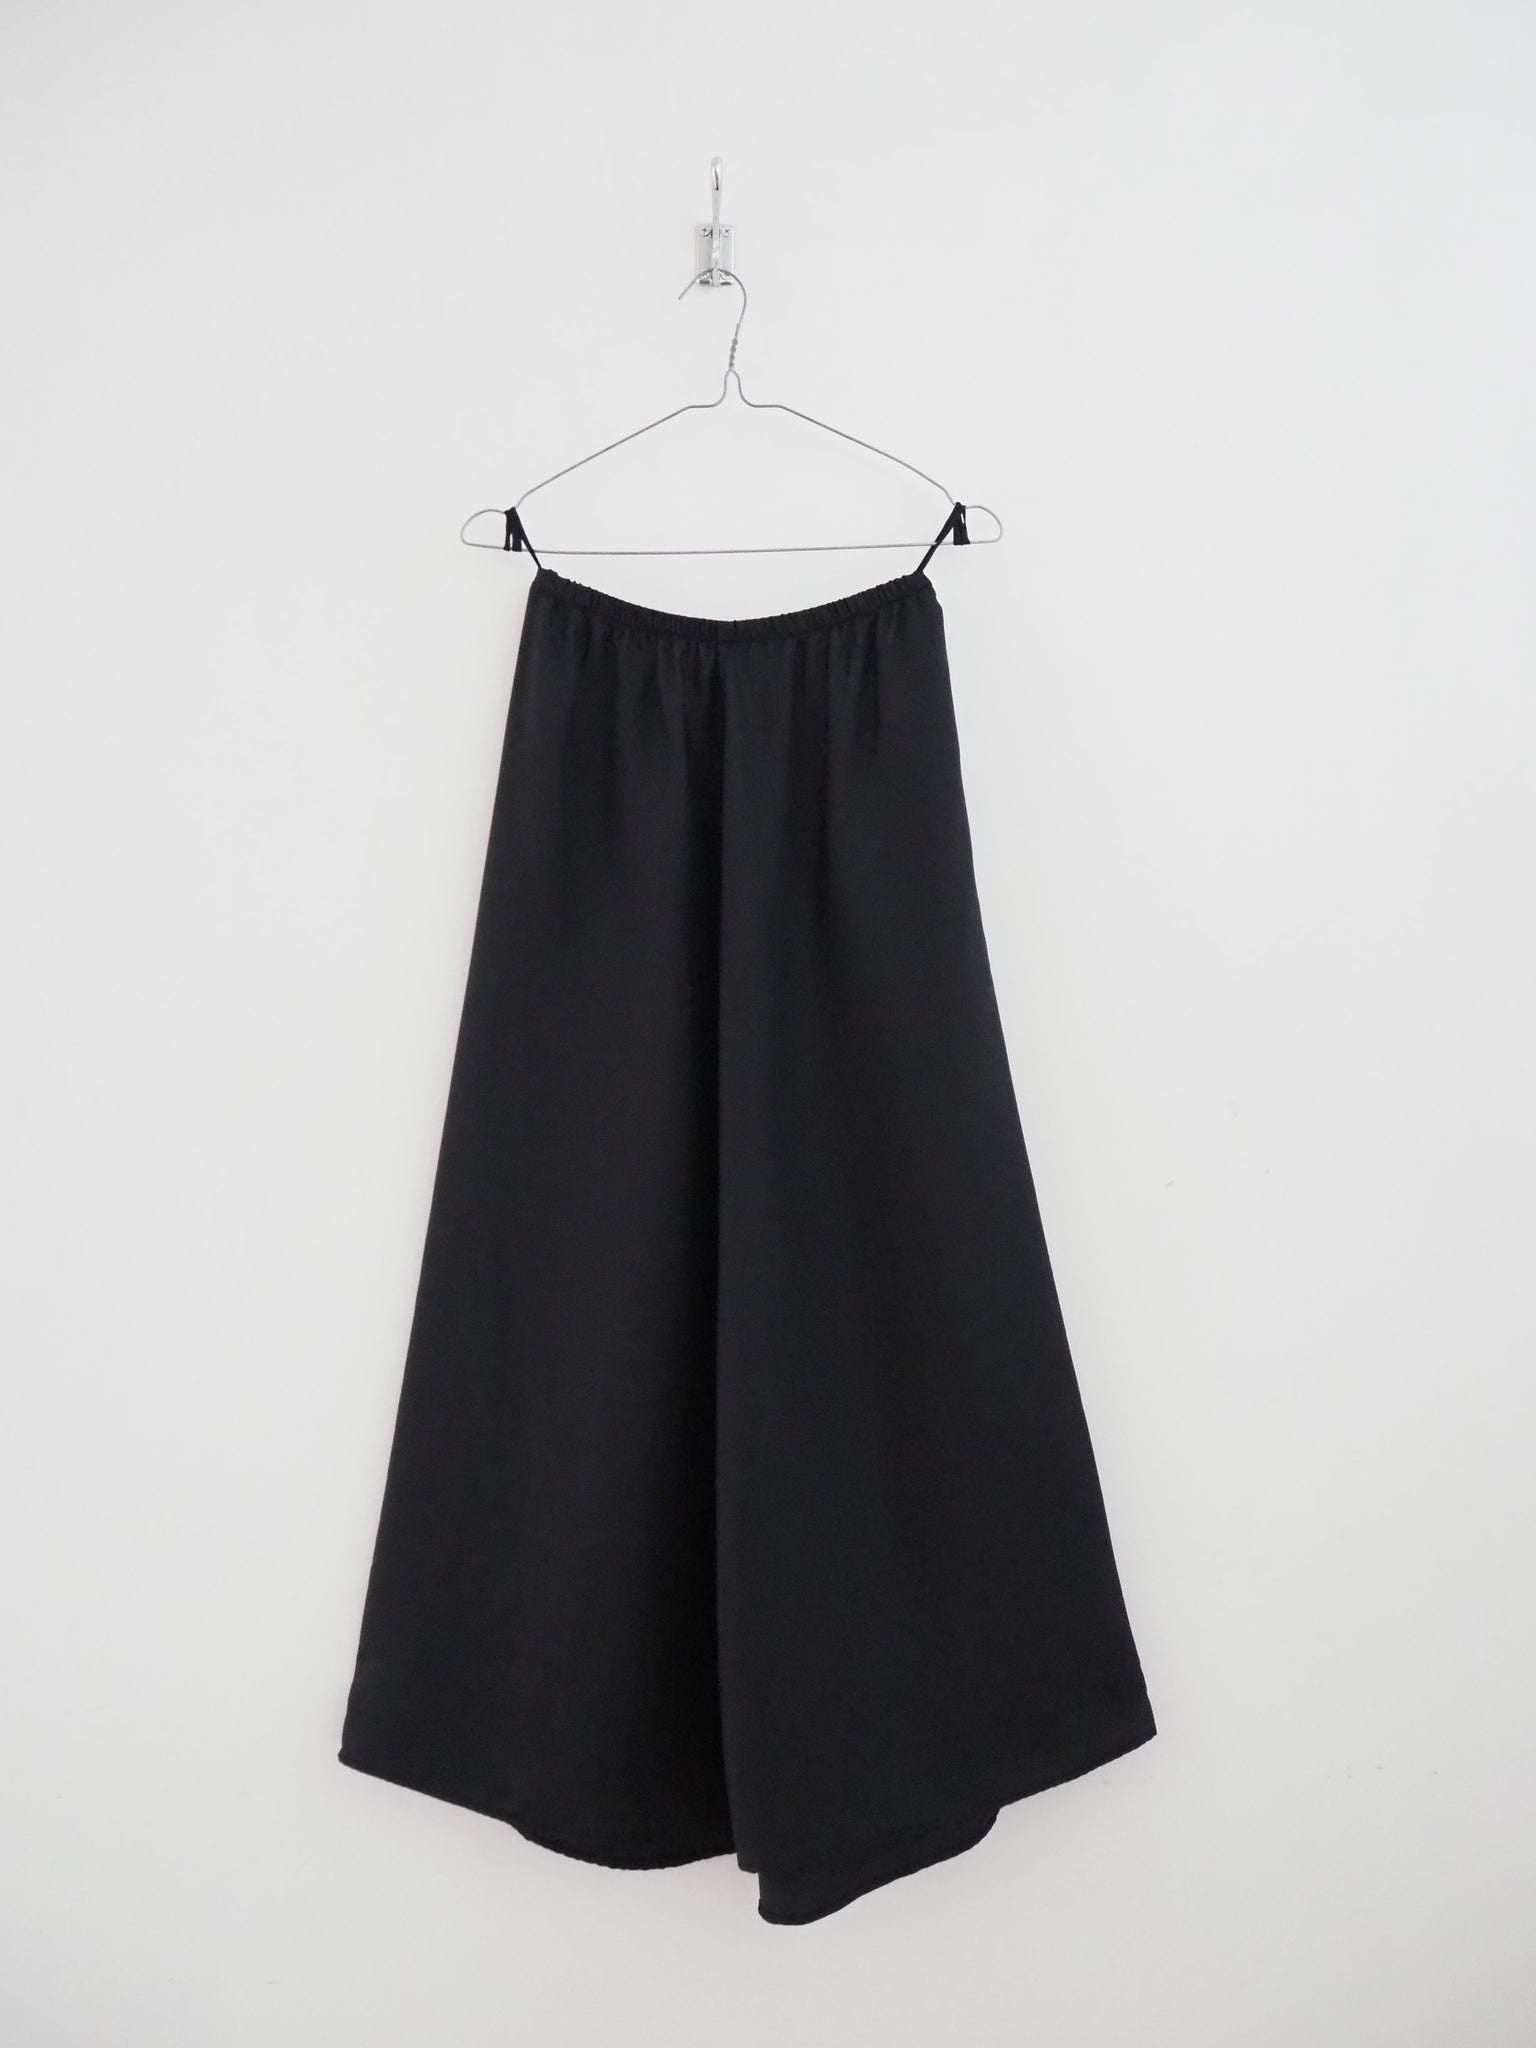 Sunday skirt - Black